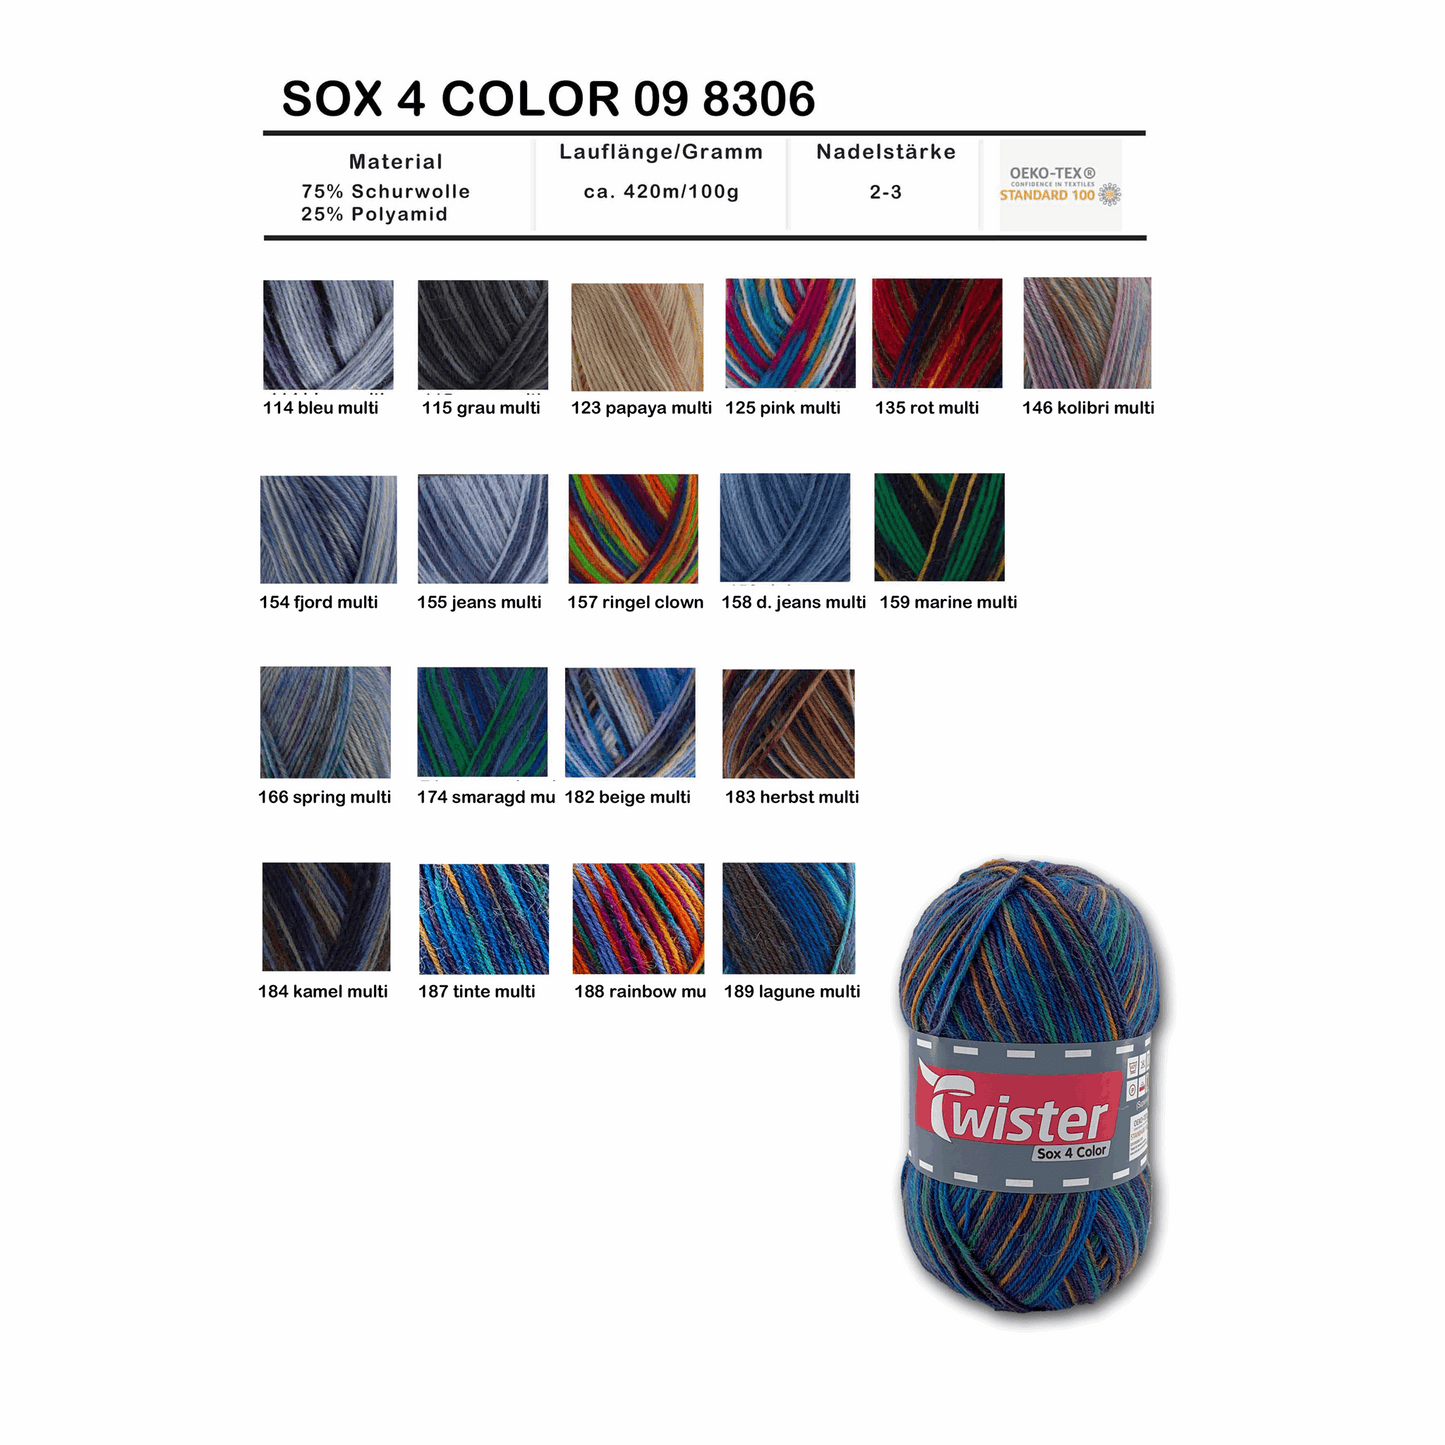 Twister Sox4 Color superwash, demin jeans multi, 98306, color 158